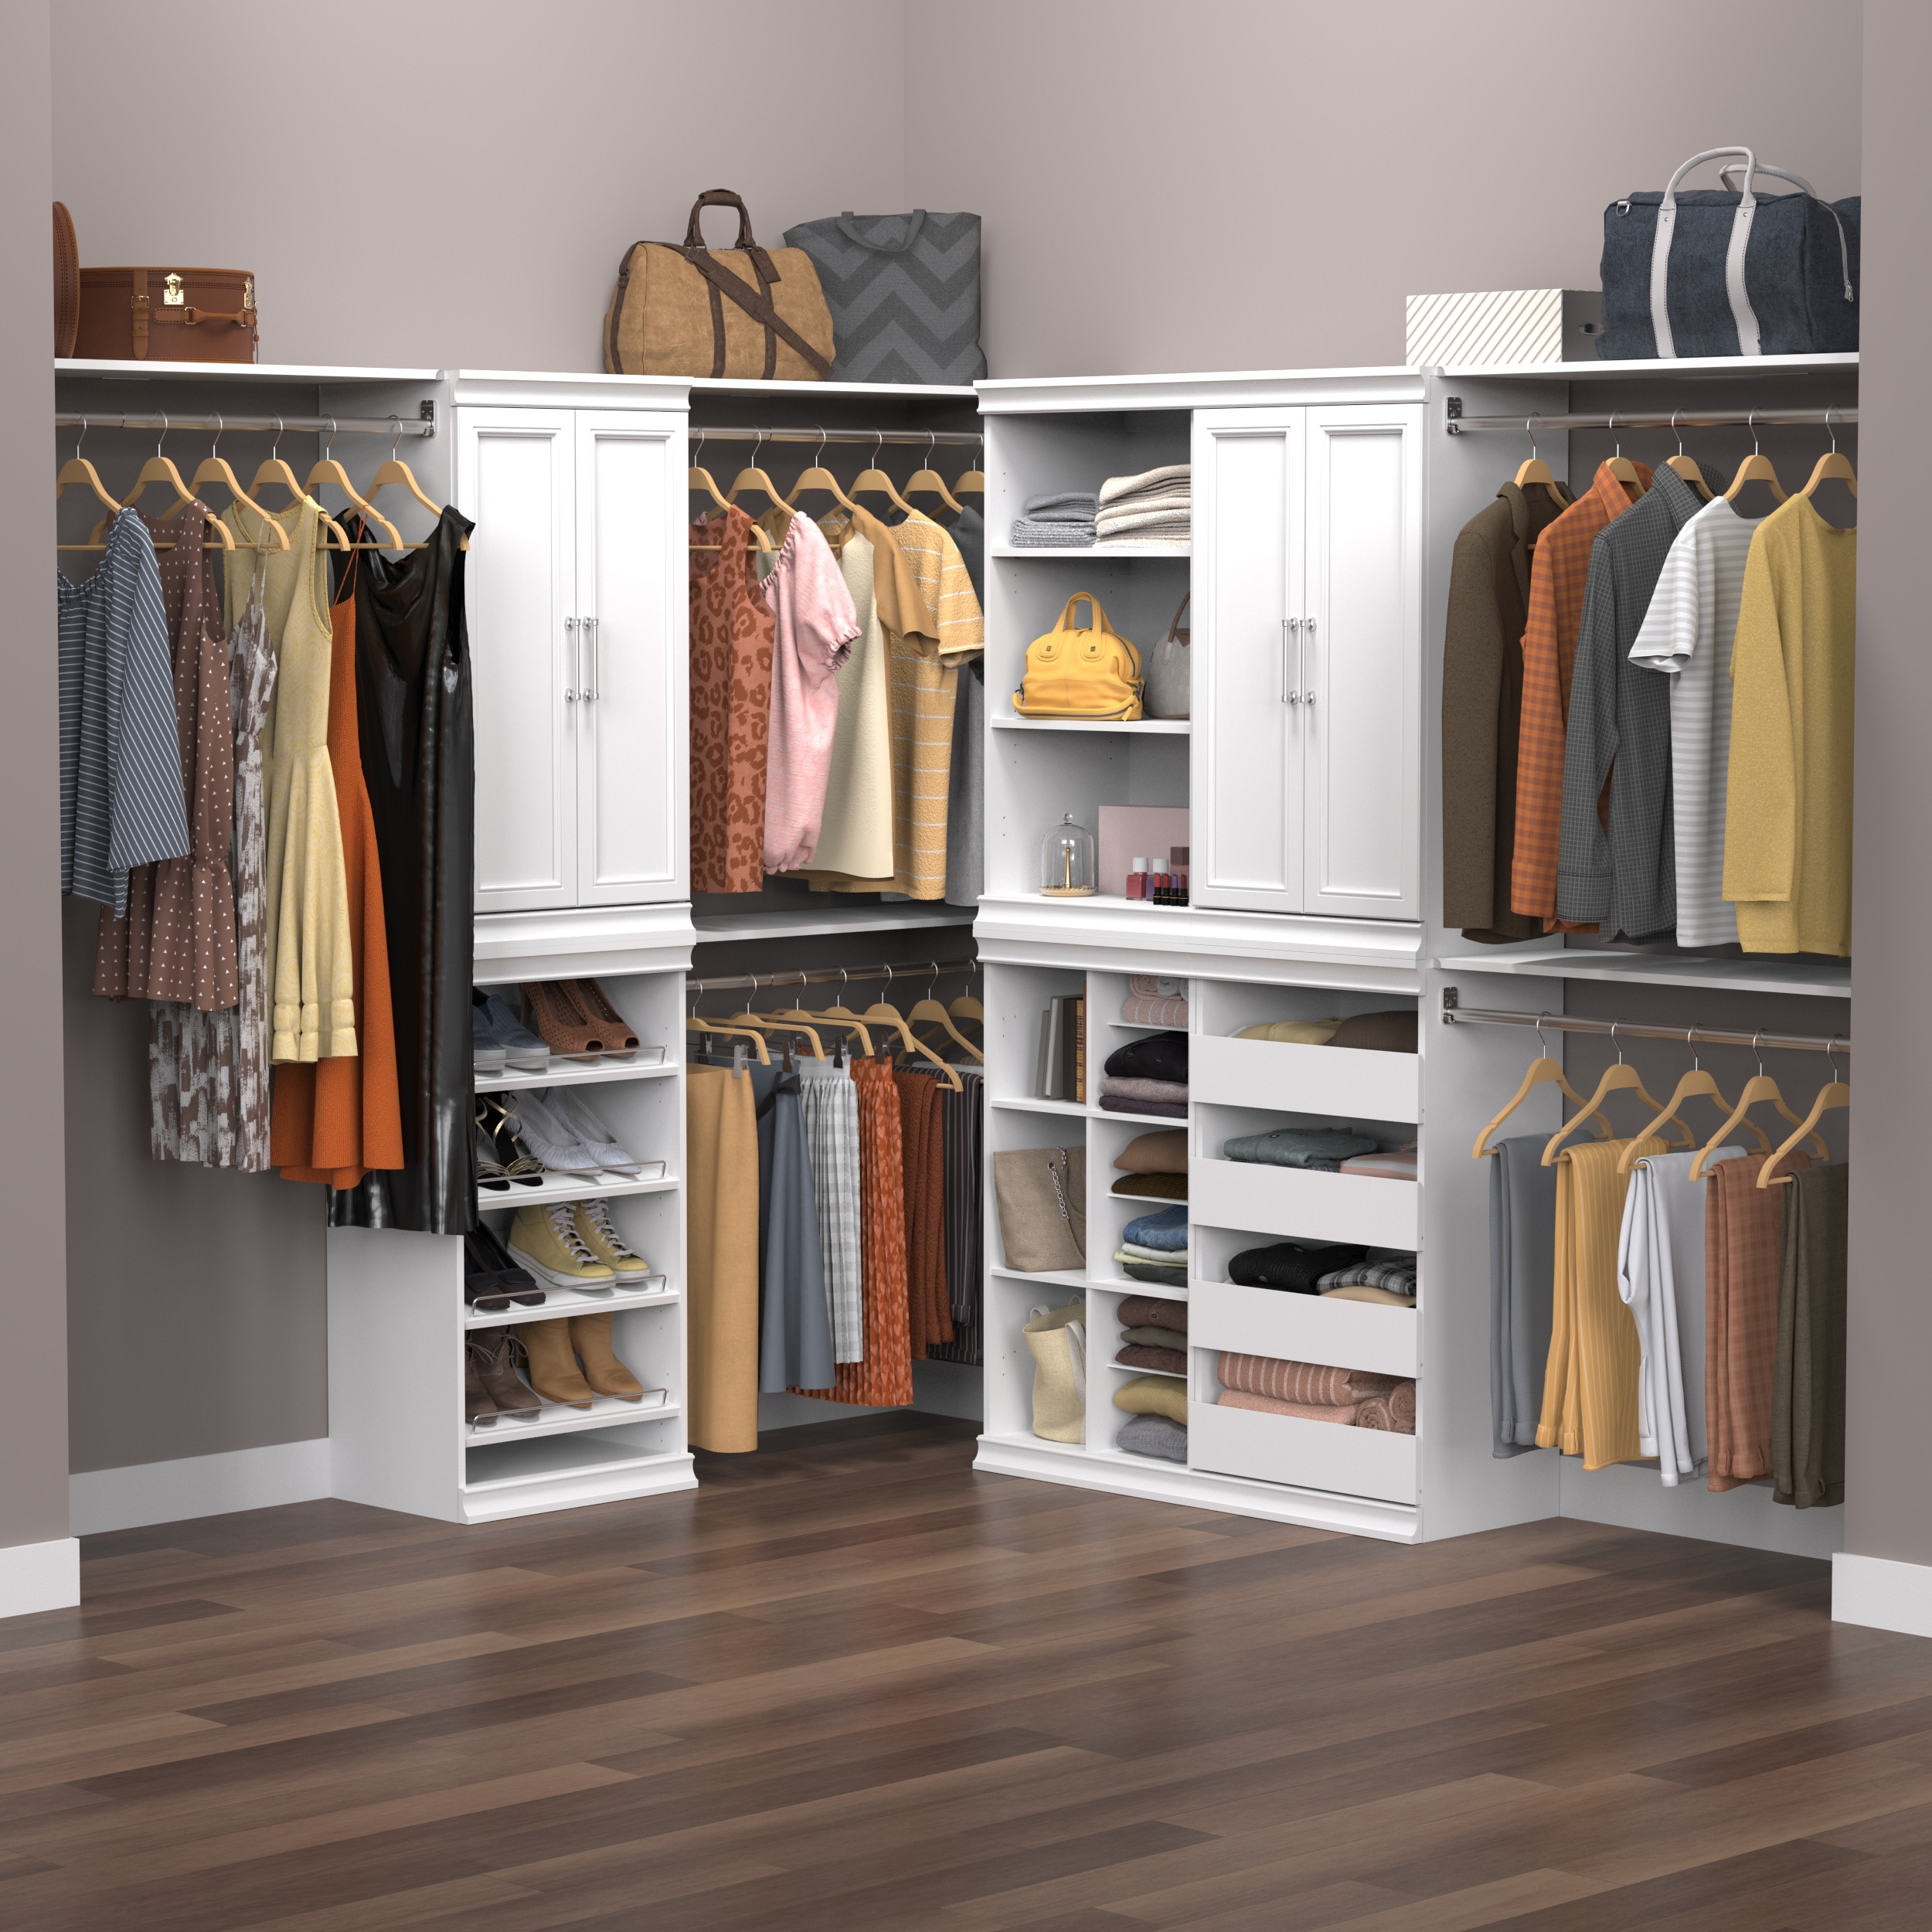 ClosetMaid Closet Organization, Closet Systems & More at Lowe's